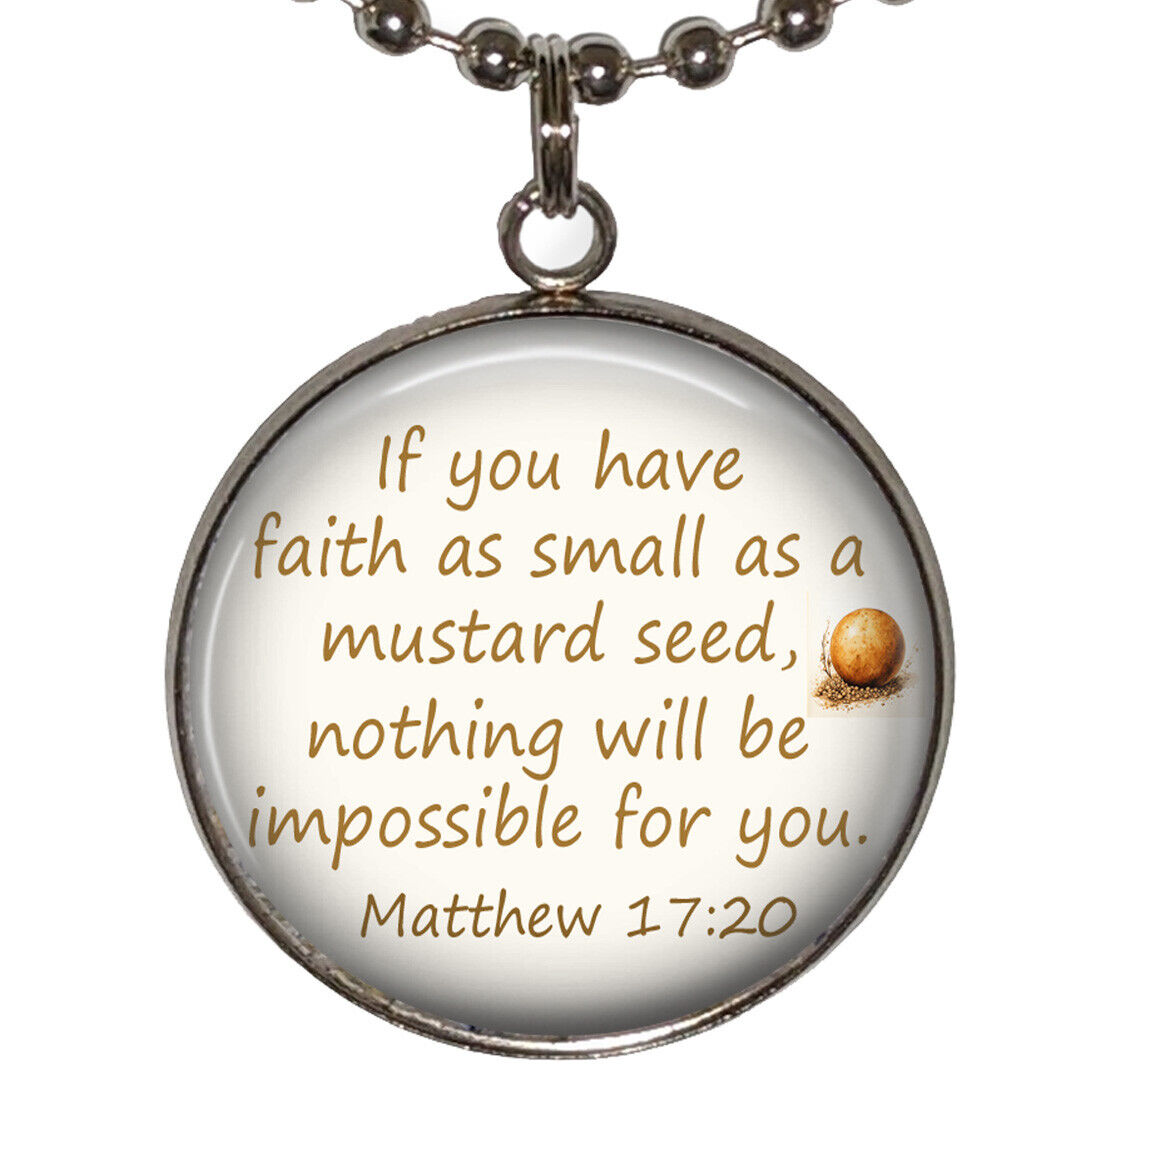 Matthew 17:20 Necklace Mustard Seed Bible Scripture Artisan Religious Gifts